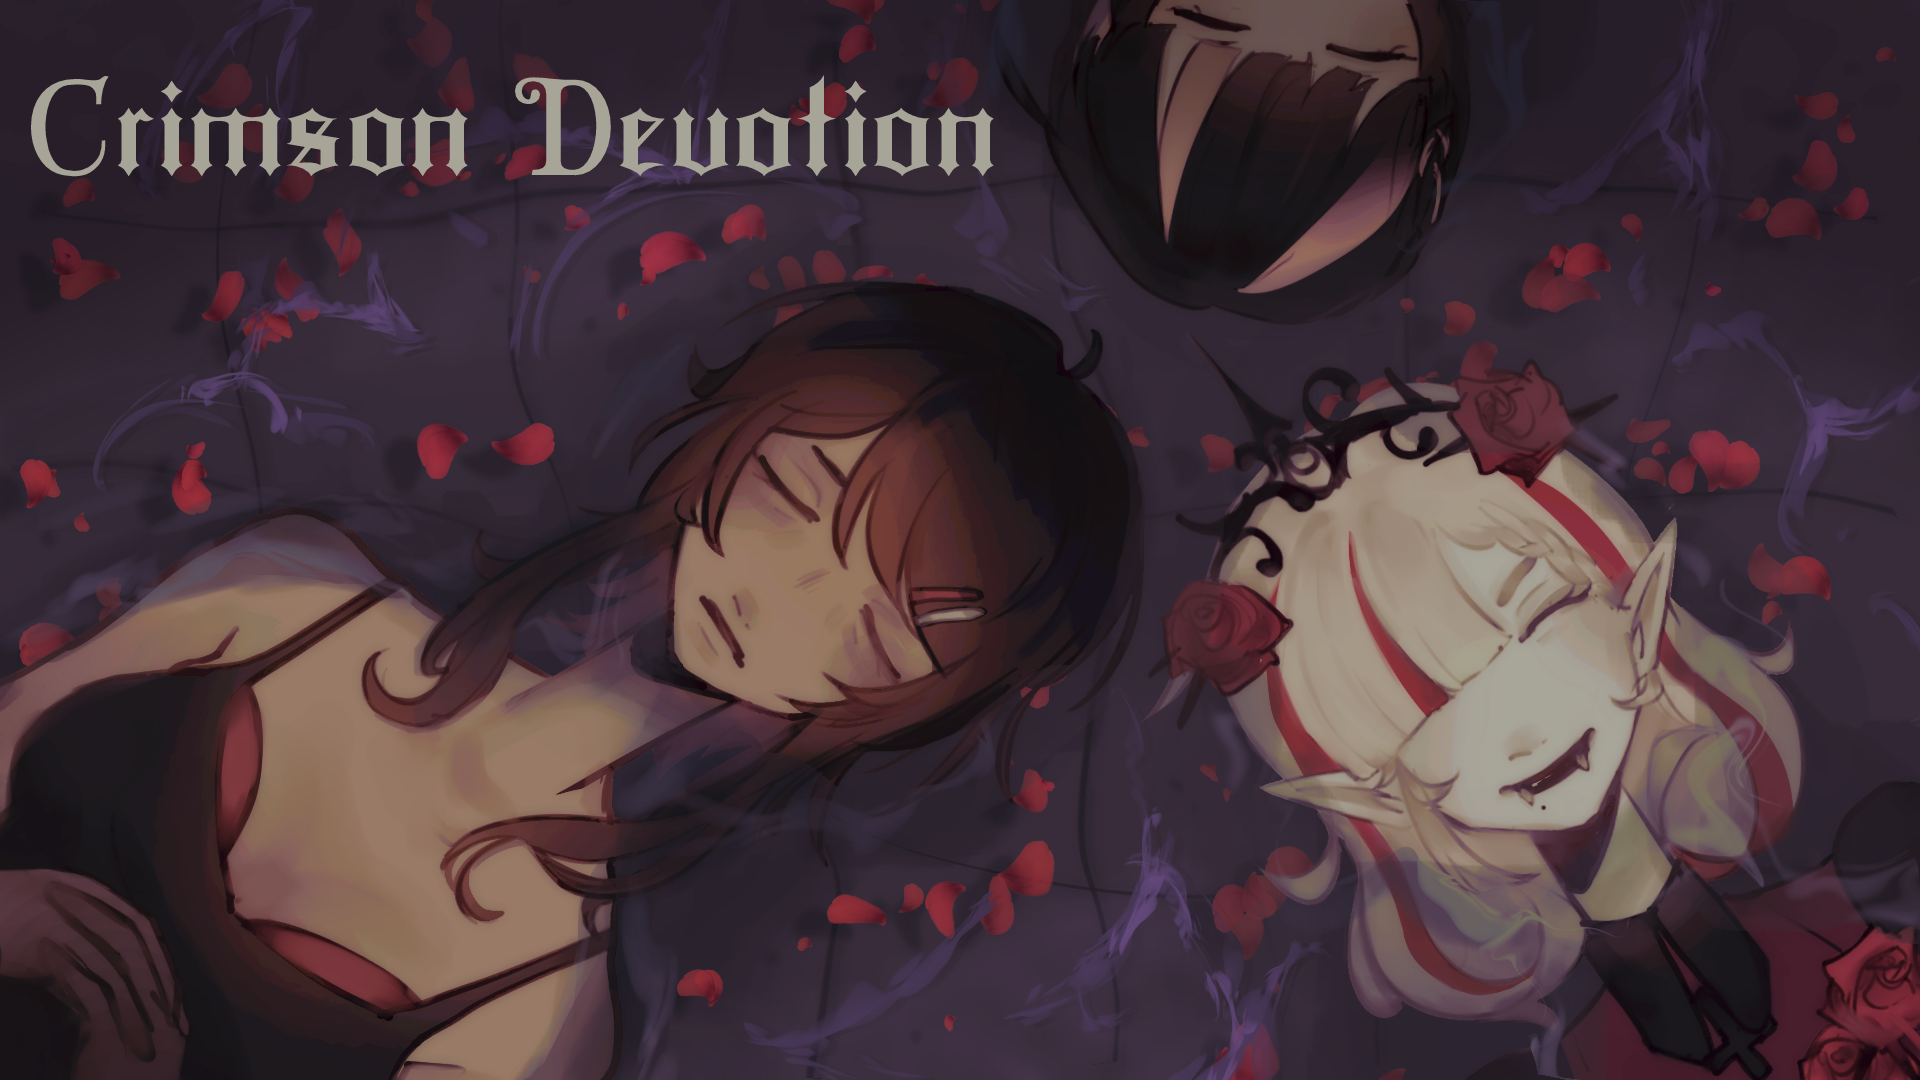 Crimson Devotion